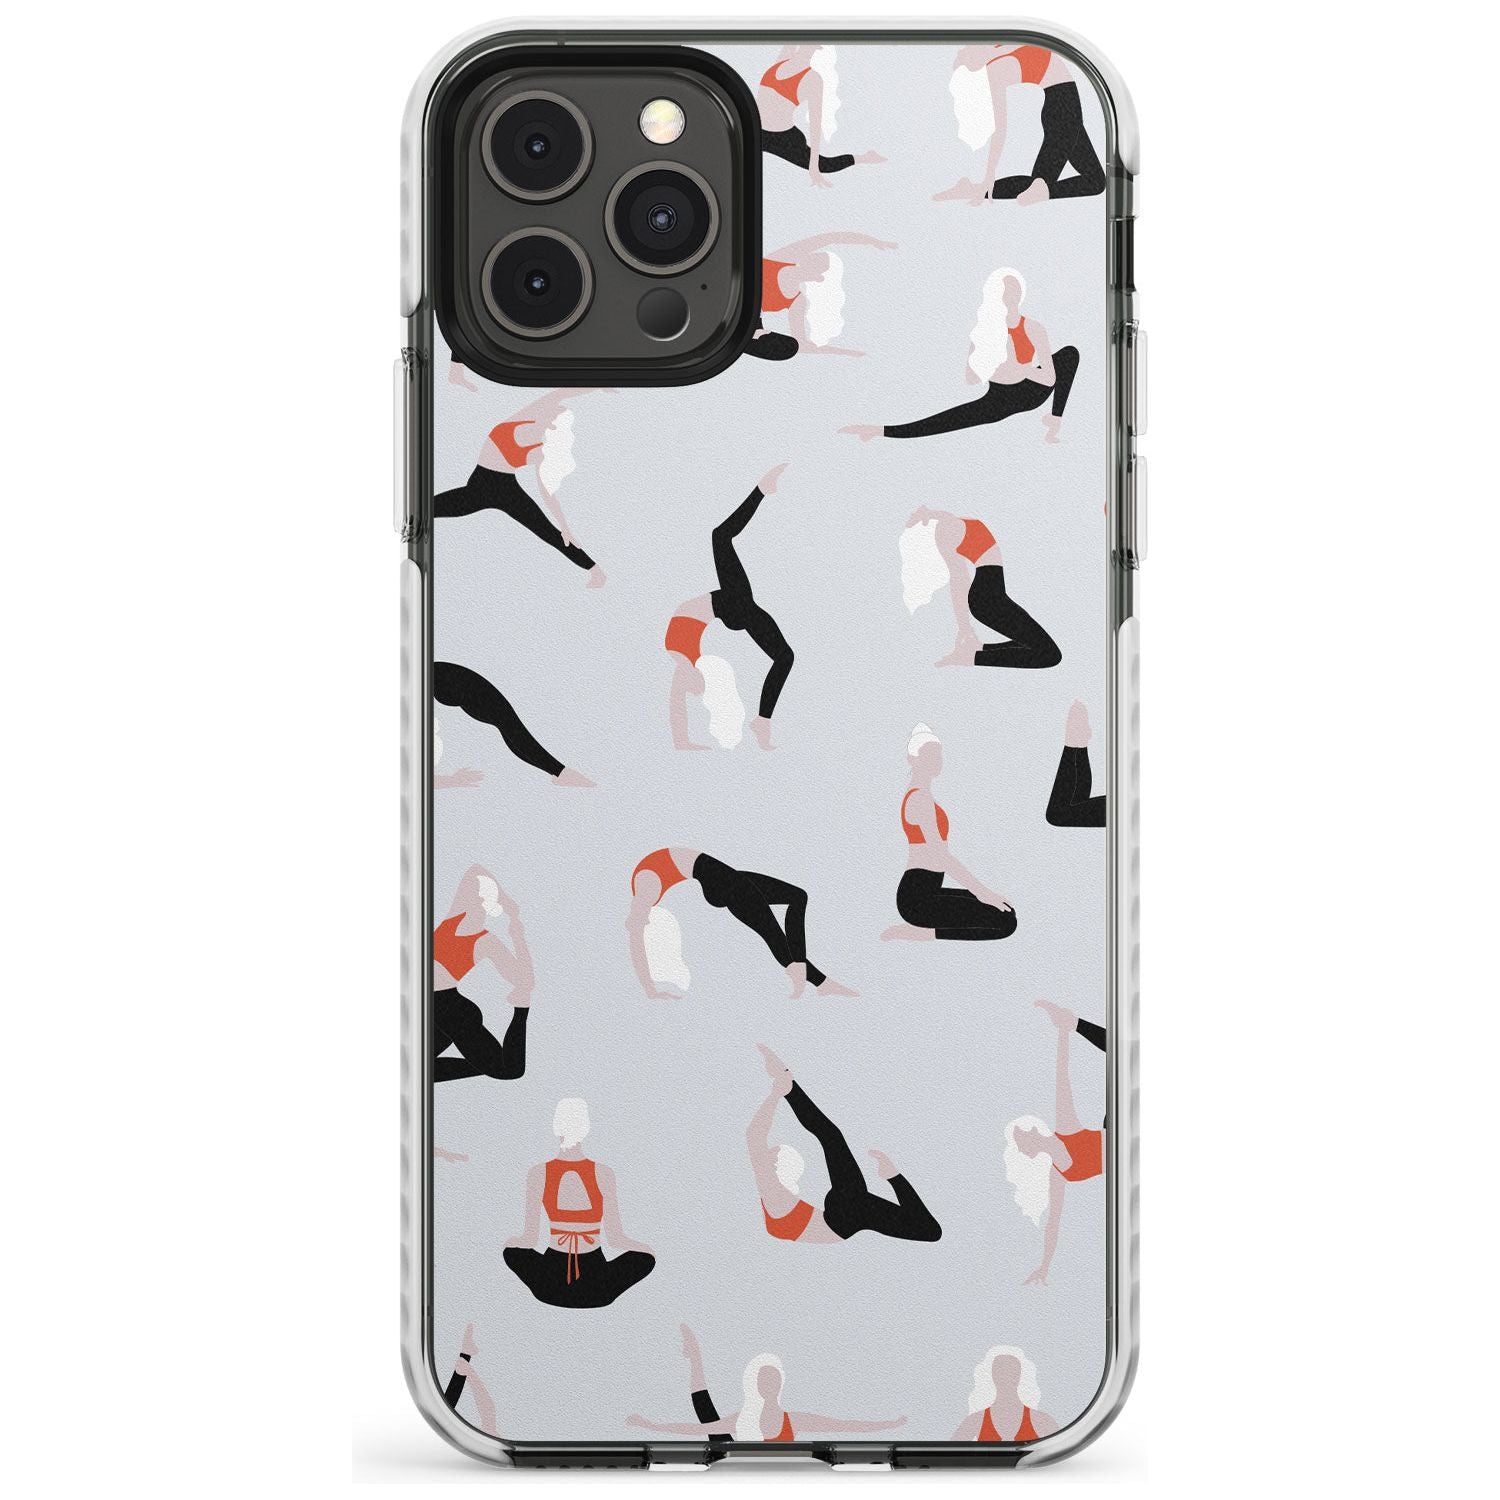 Yoga Poses Slim TPU Phone Case for iPhone 11 Pro Max